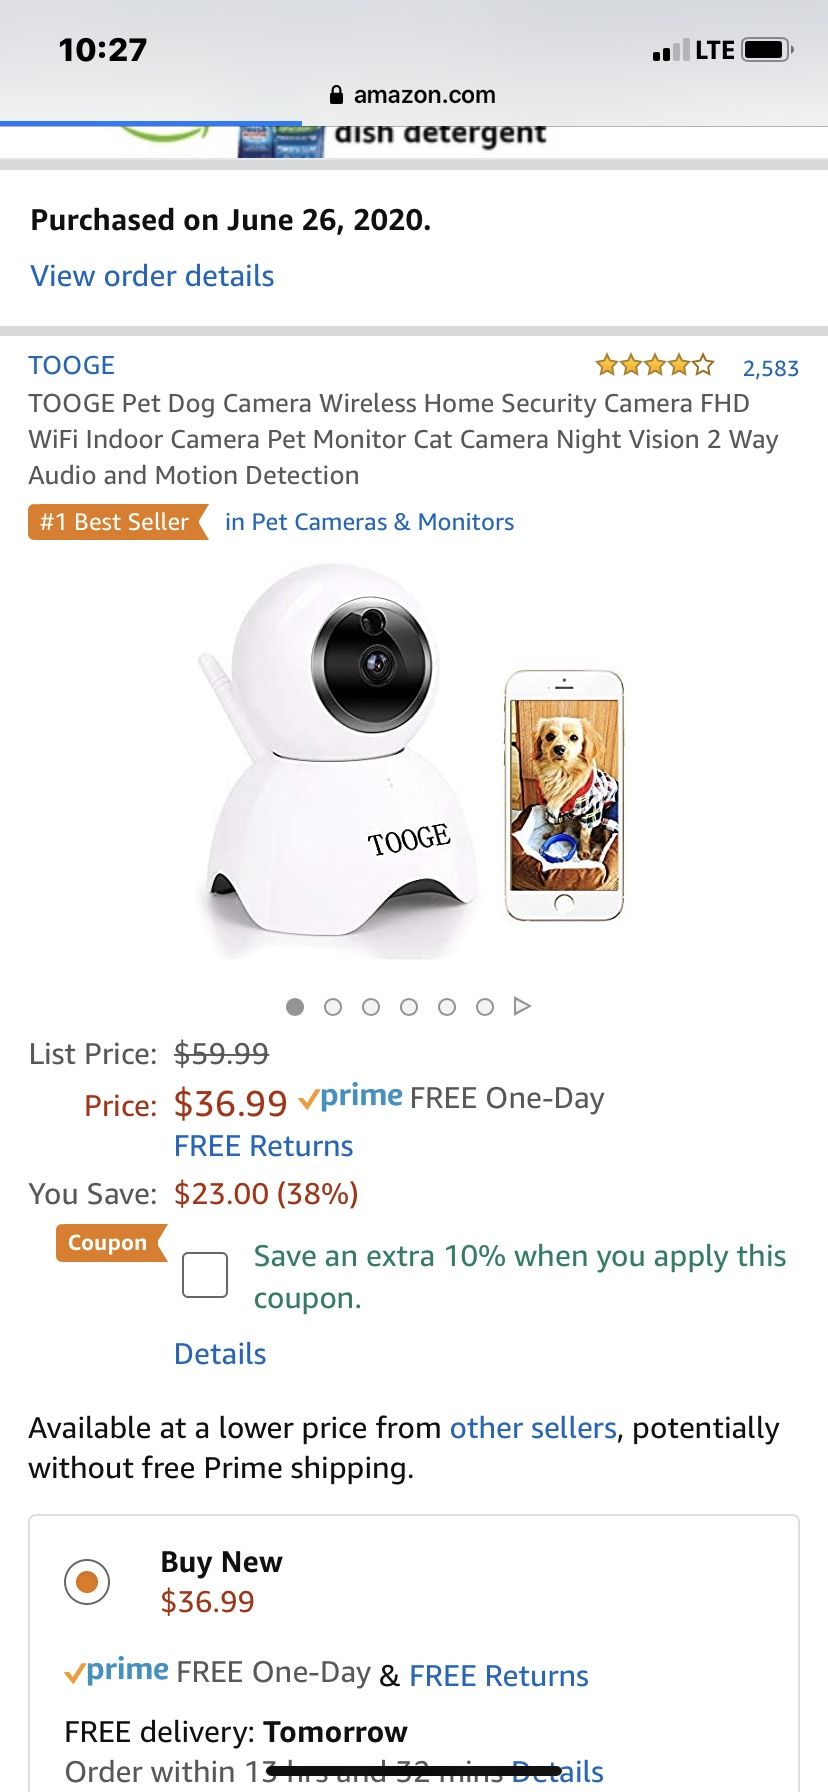 Brand new dog camera